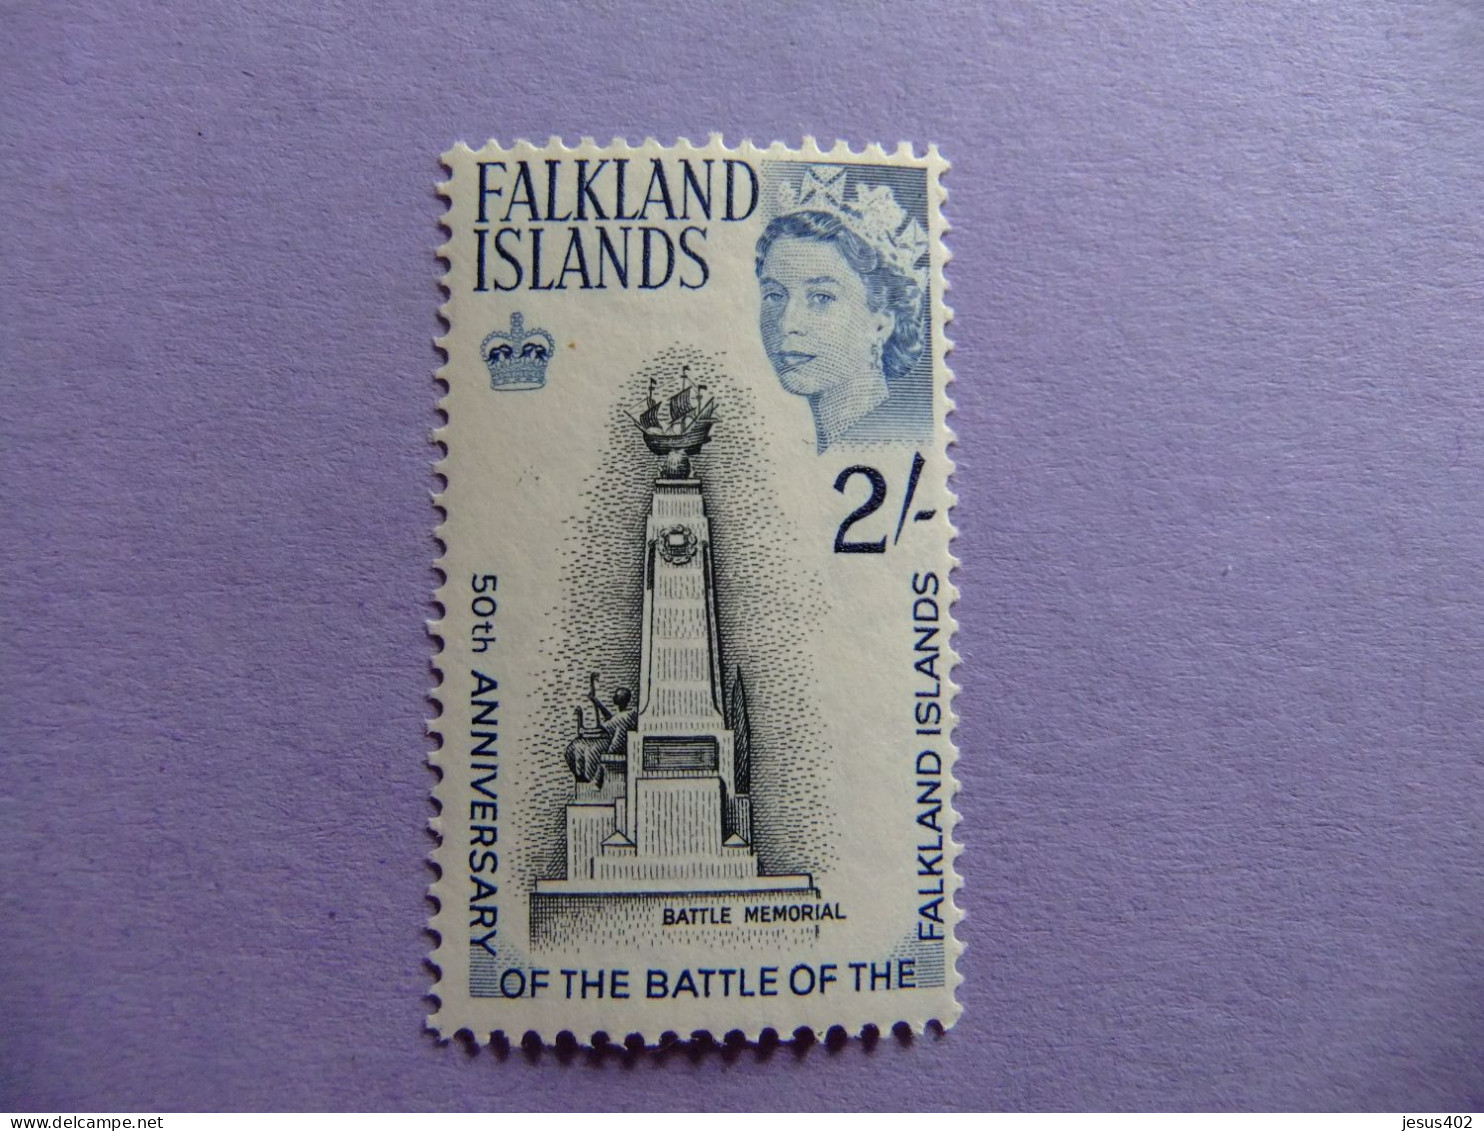 MALVINAS FALKLAND ISLANDS 1964 MEMORIAL DE LA BATALLA E FALKLAND YVERT 147 MNH - Maldives (...-1965)